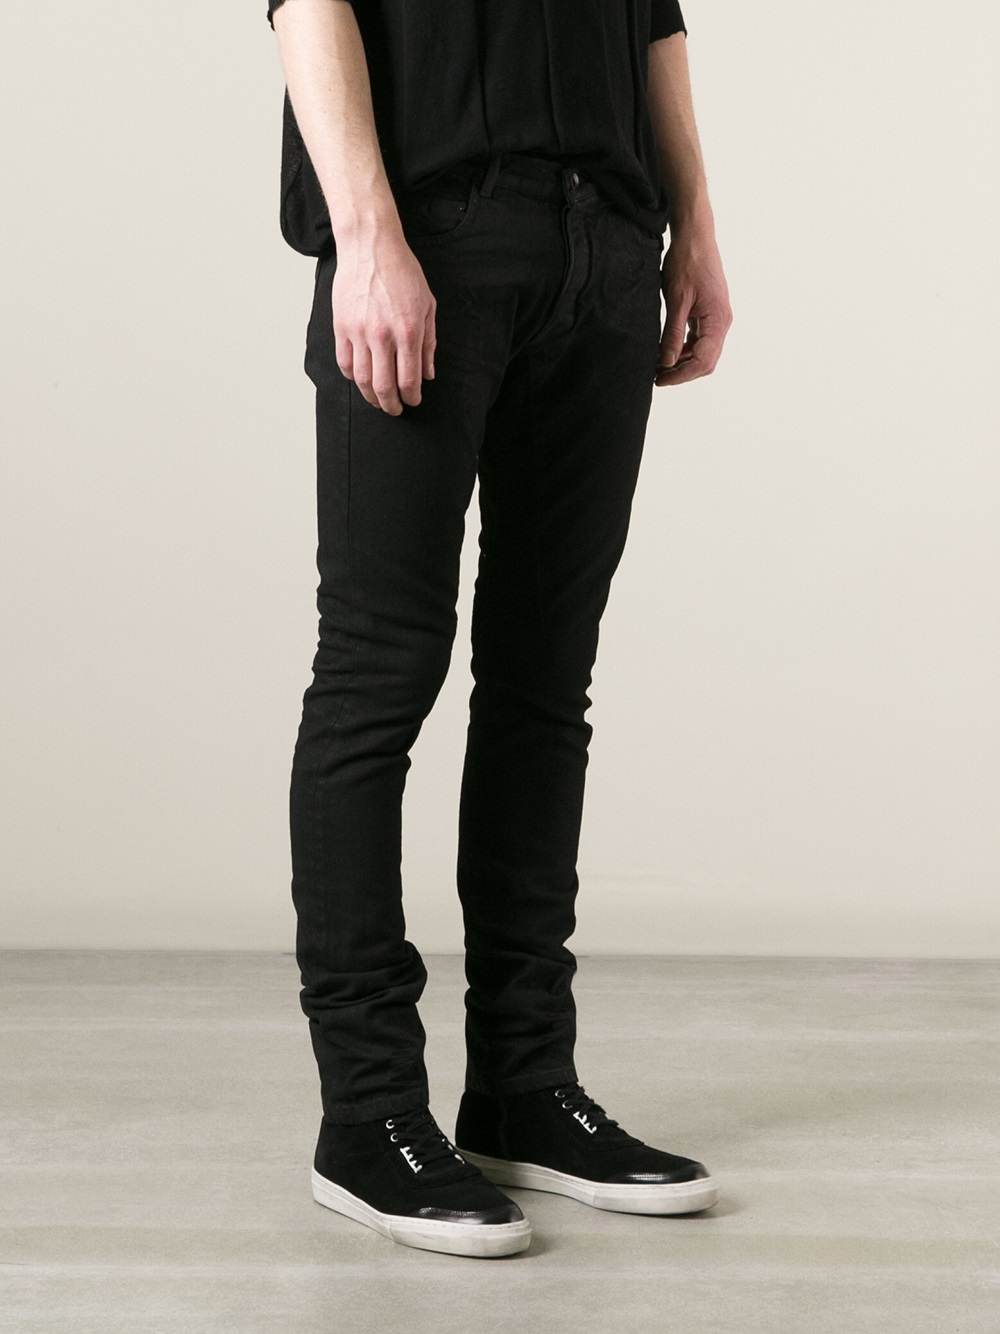 Lyst - DRKSHDW by Rick Owens Detroit Jeans in Black for Men